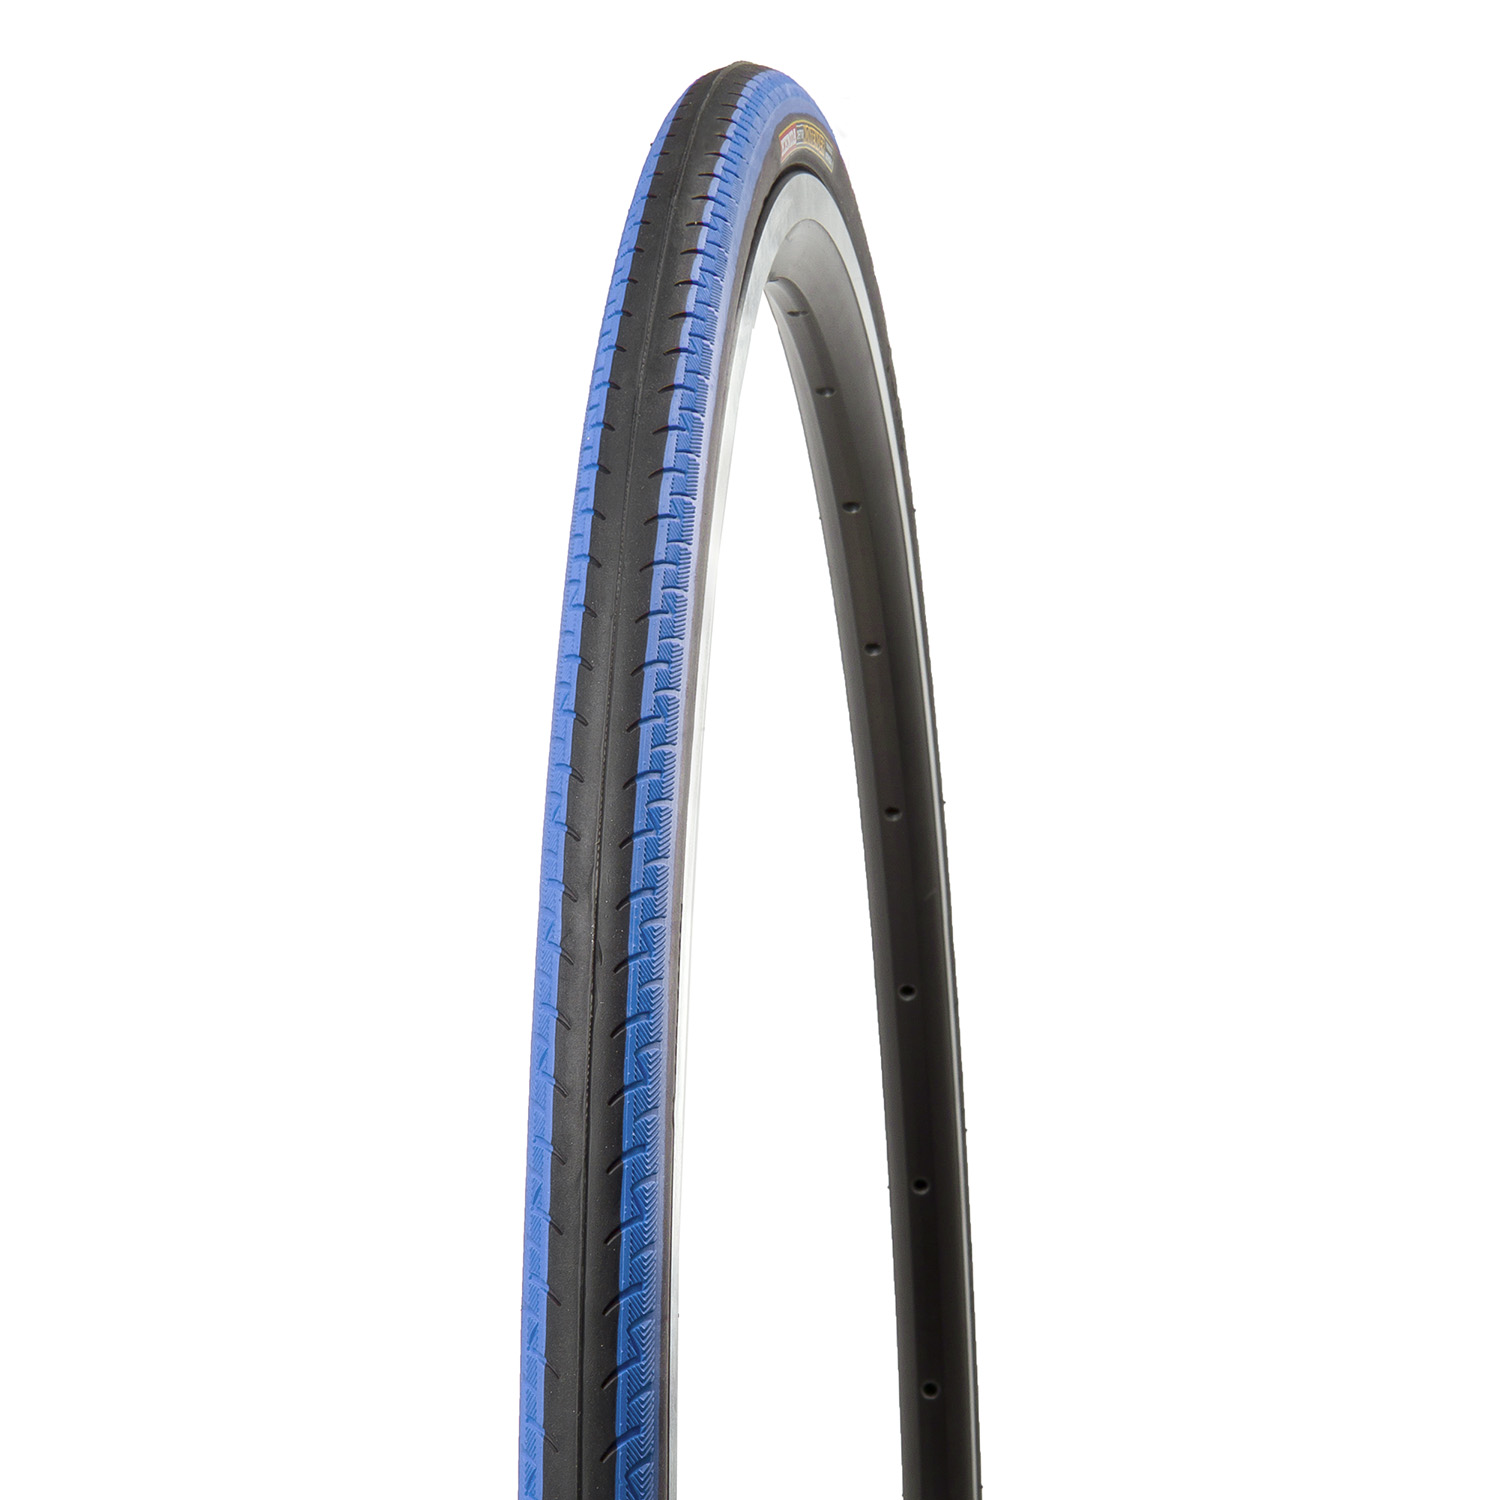 Reifen KENDA Race, K 196, KONTENDER, 23-622 in, schwarz/blau, 700 x 23 C